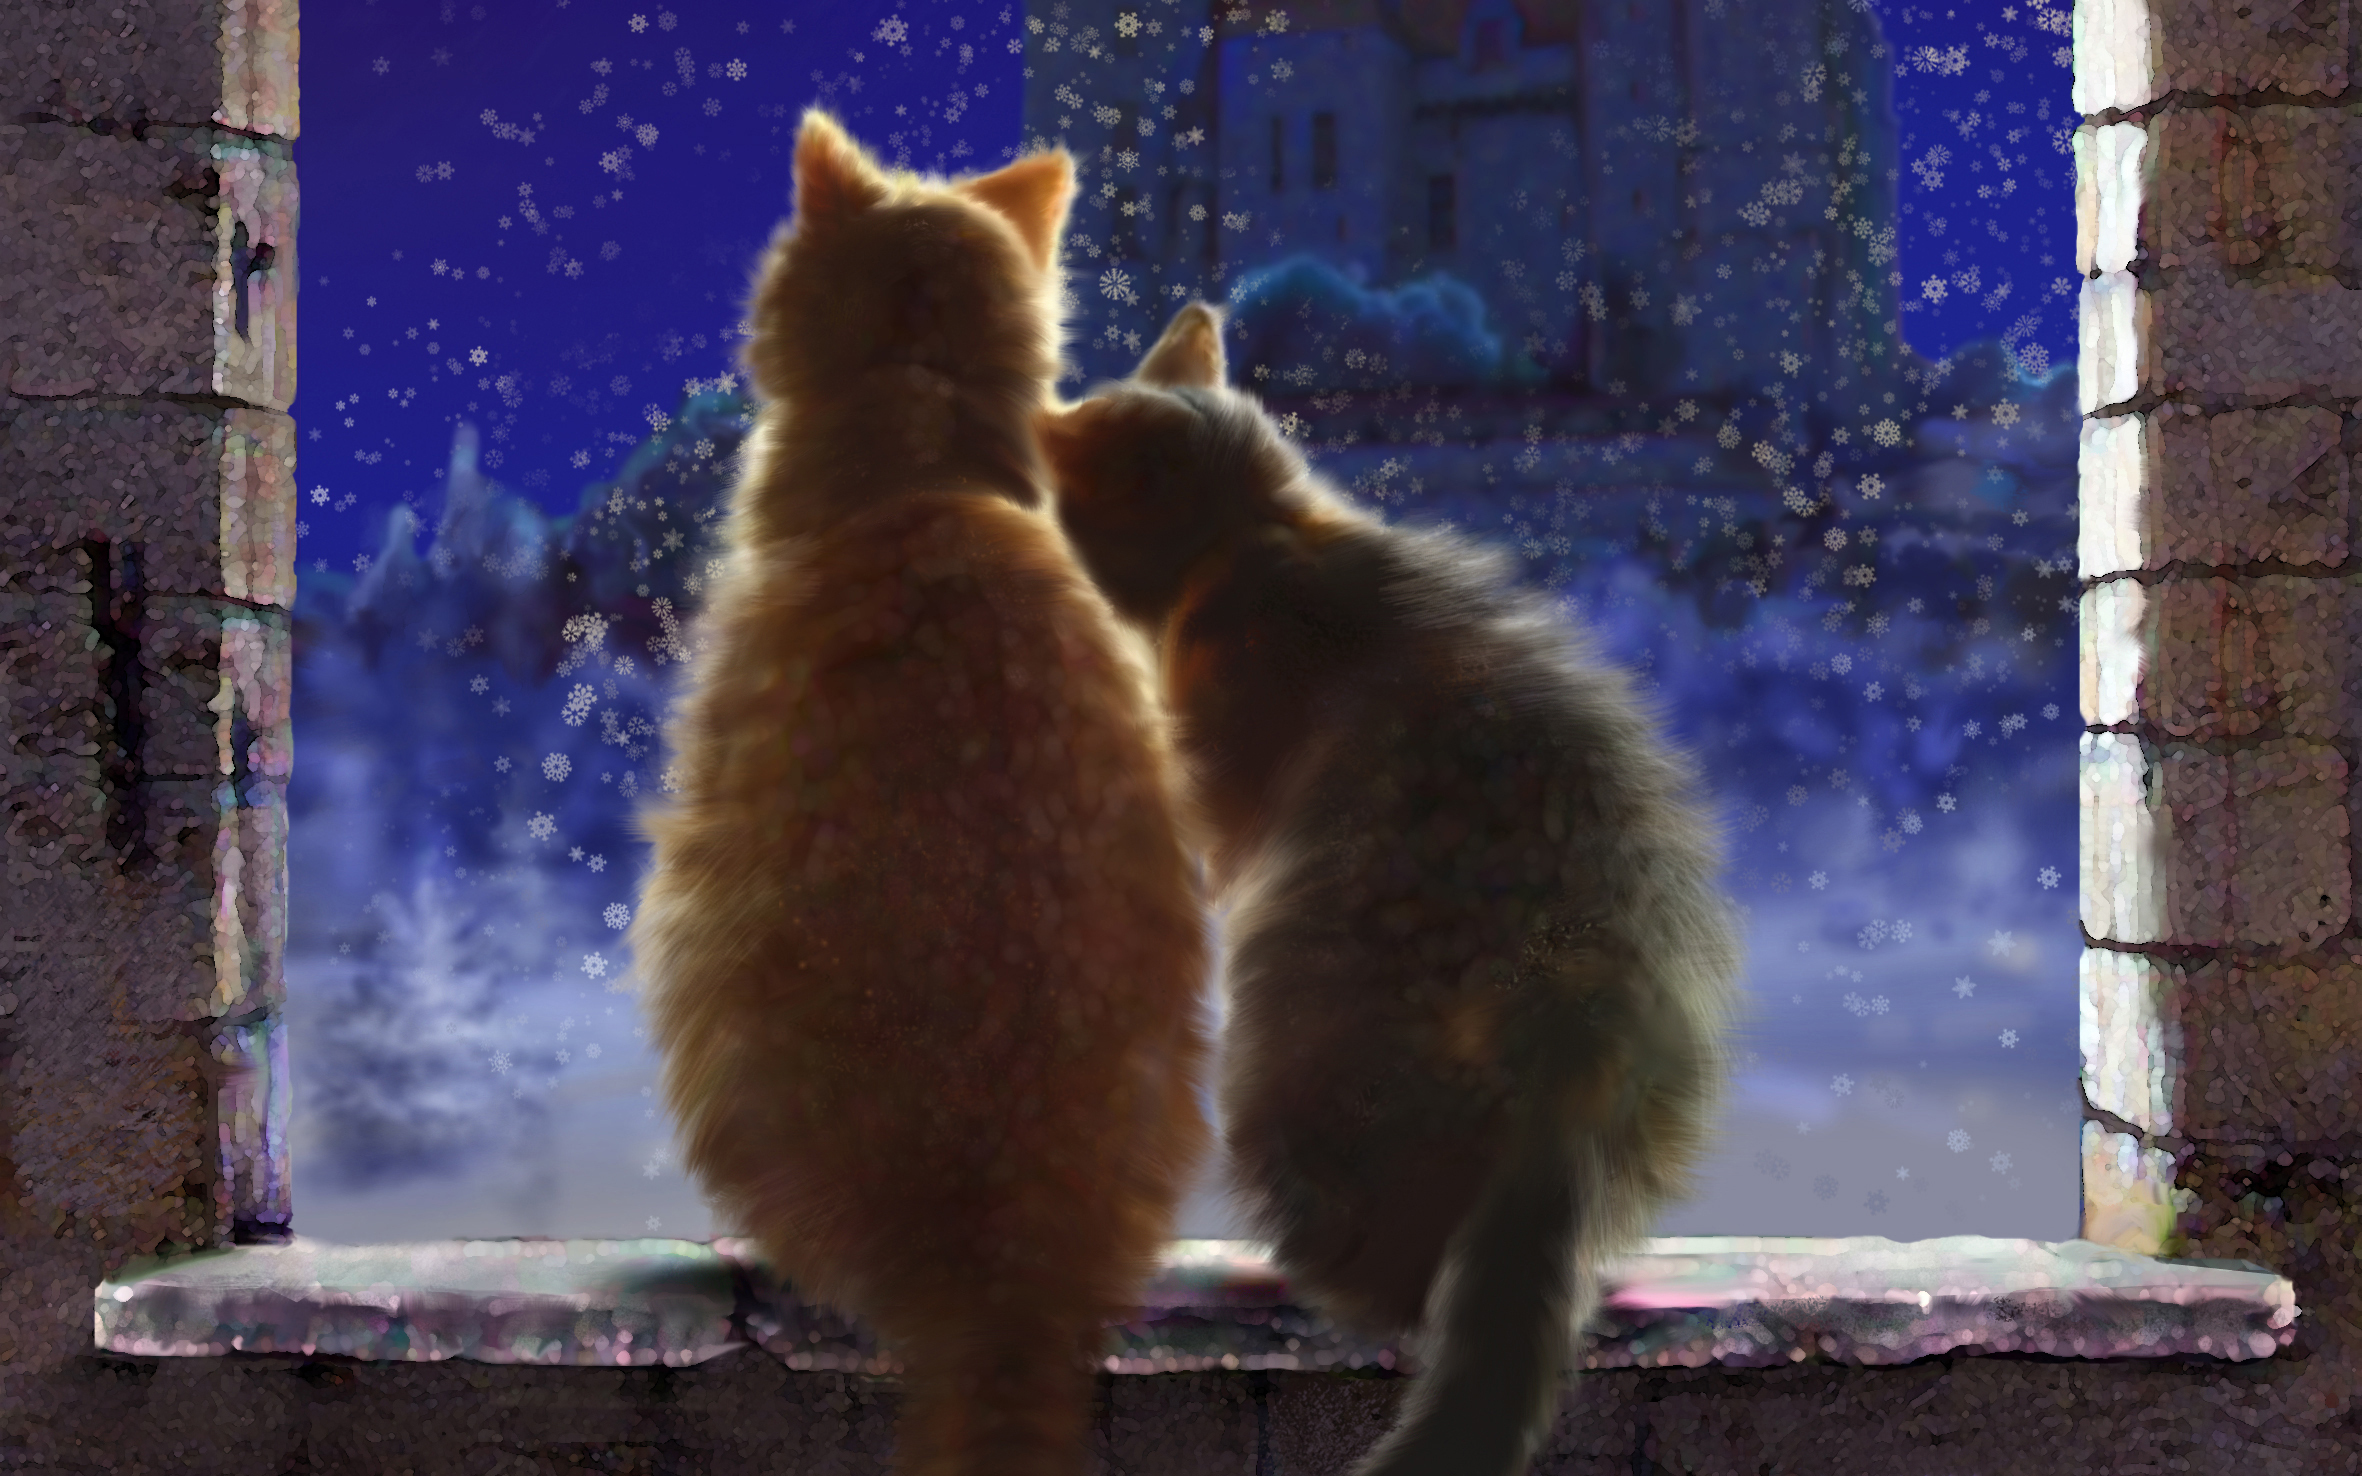 Art cat couple love winter window sill castle night snowflakes 2362x1476